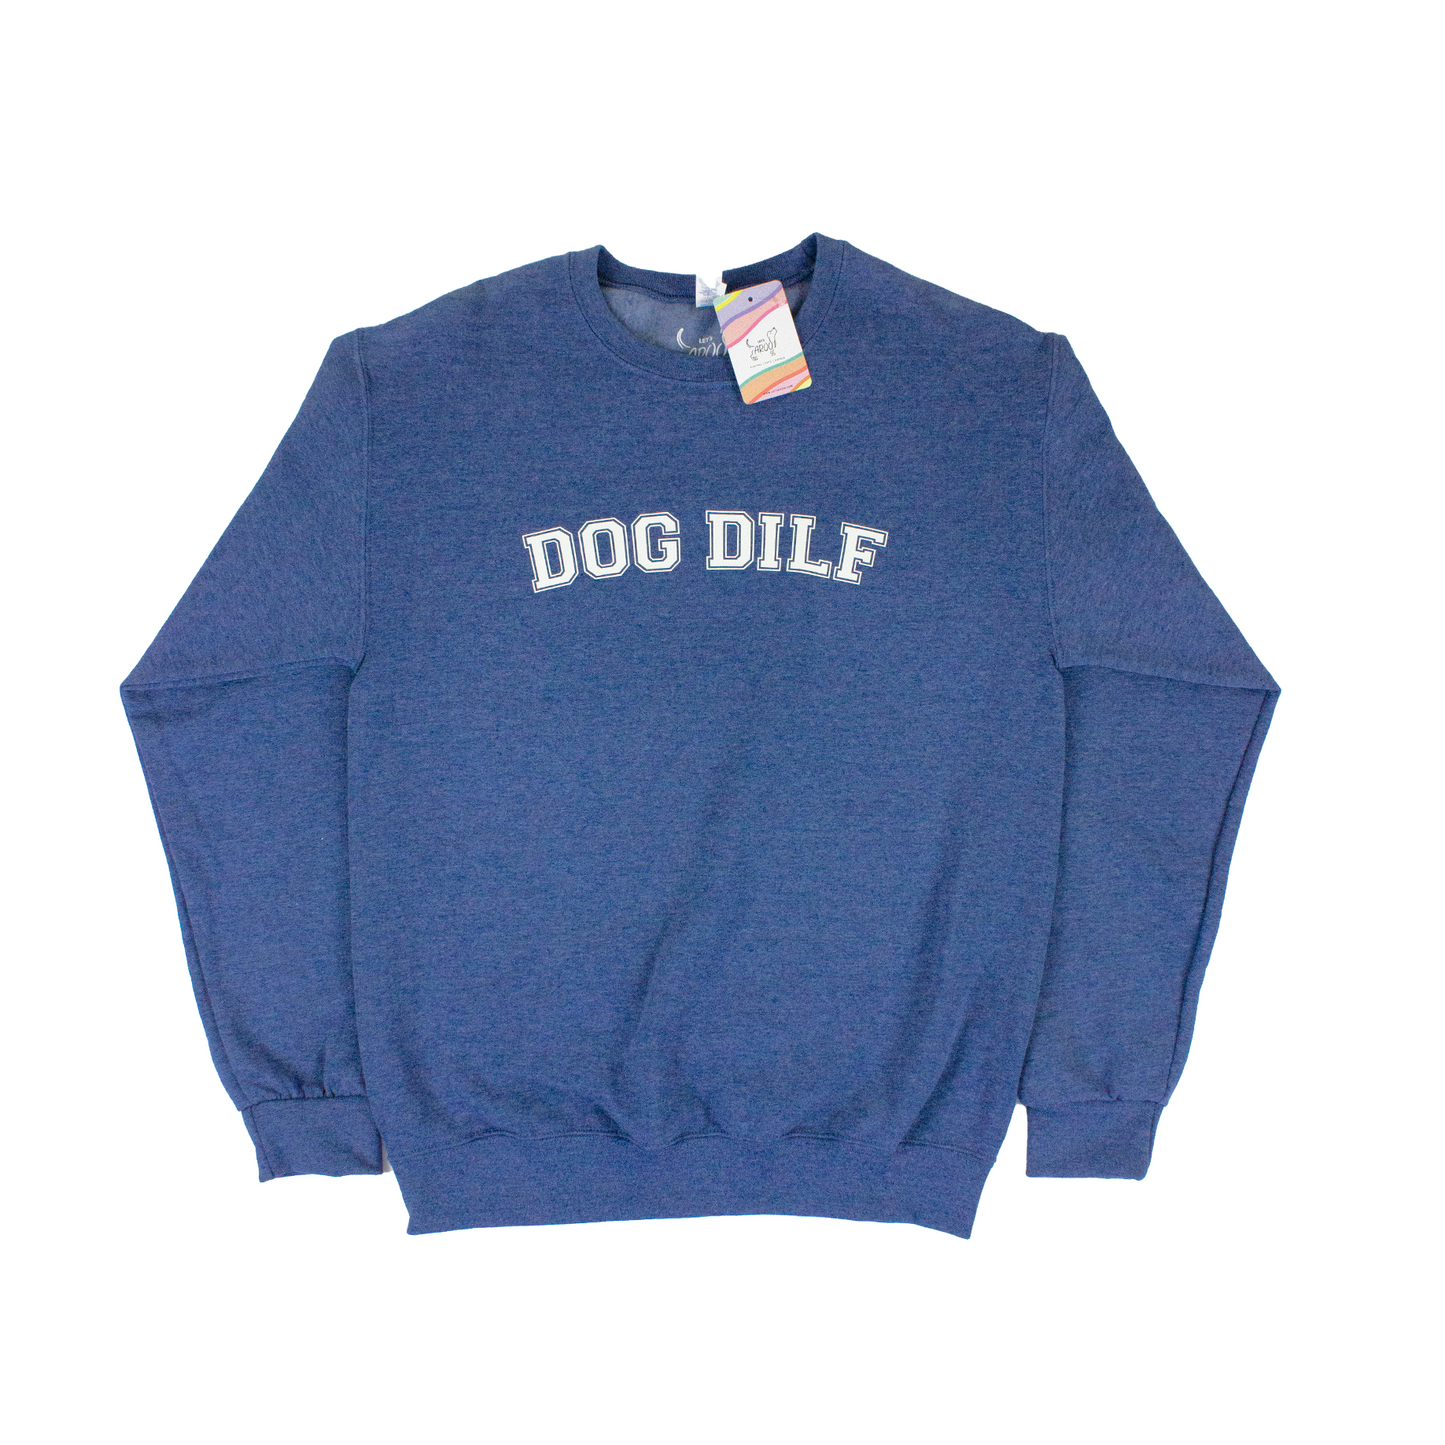 Dog DILF Crewneck Sweatshirt